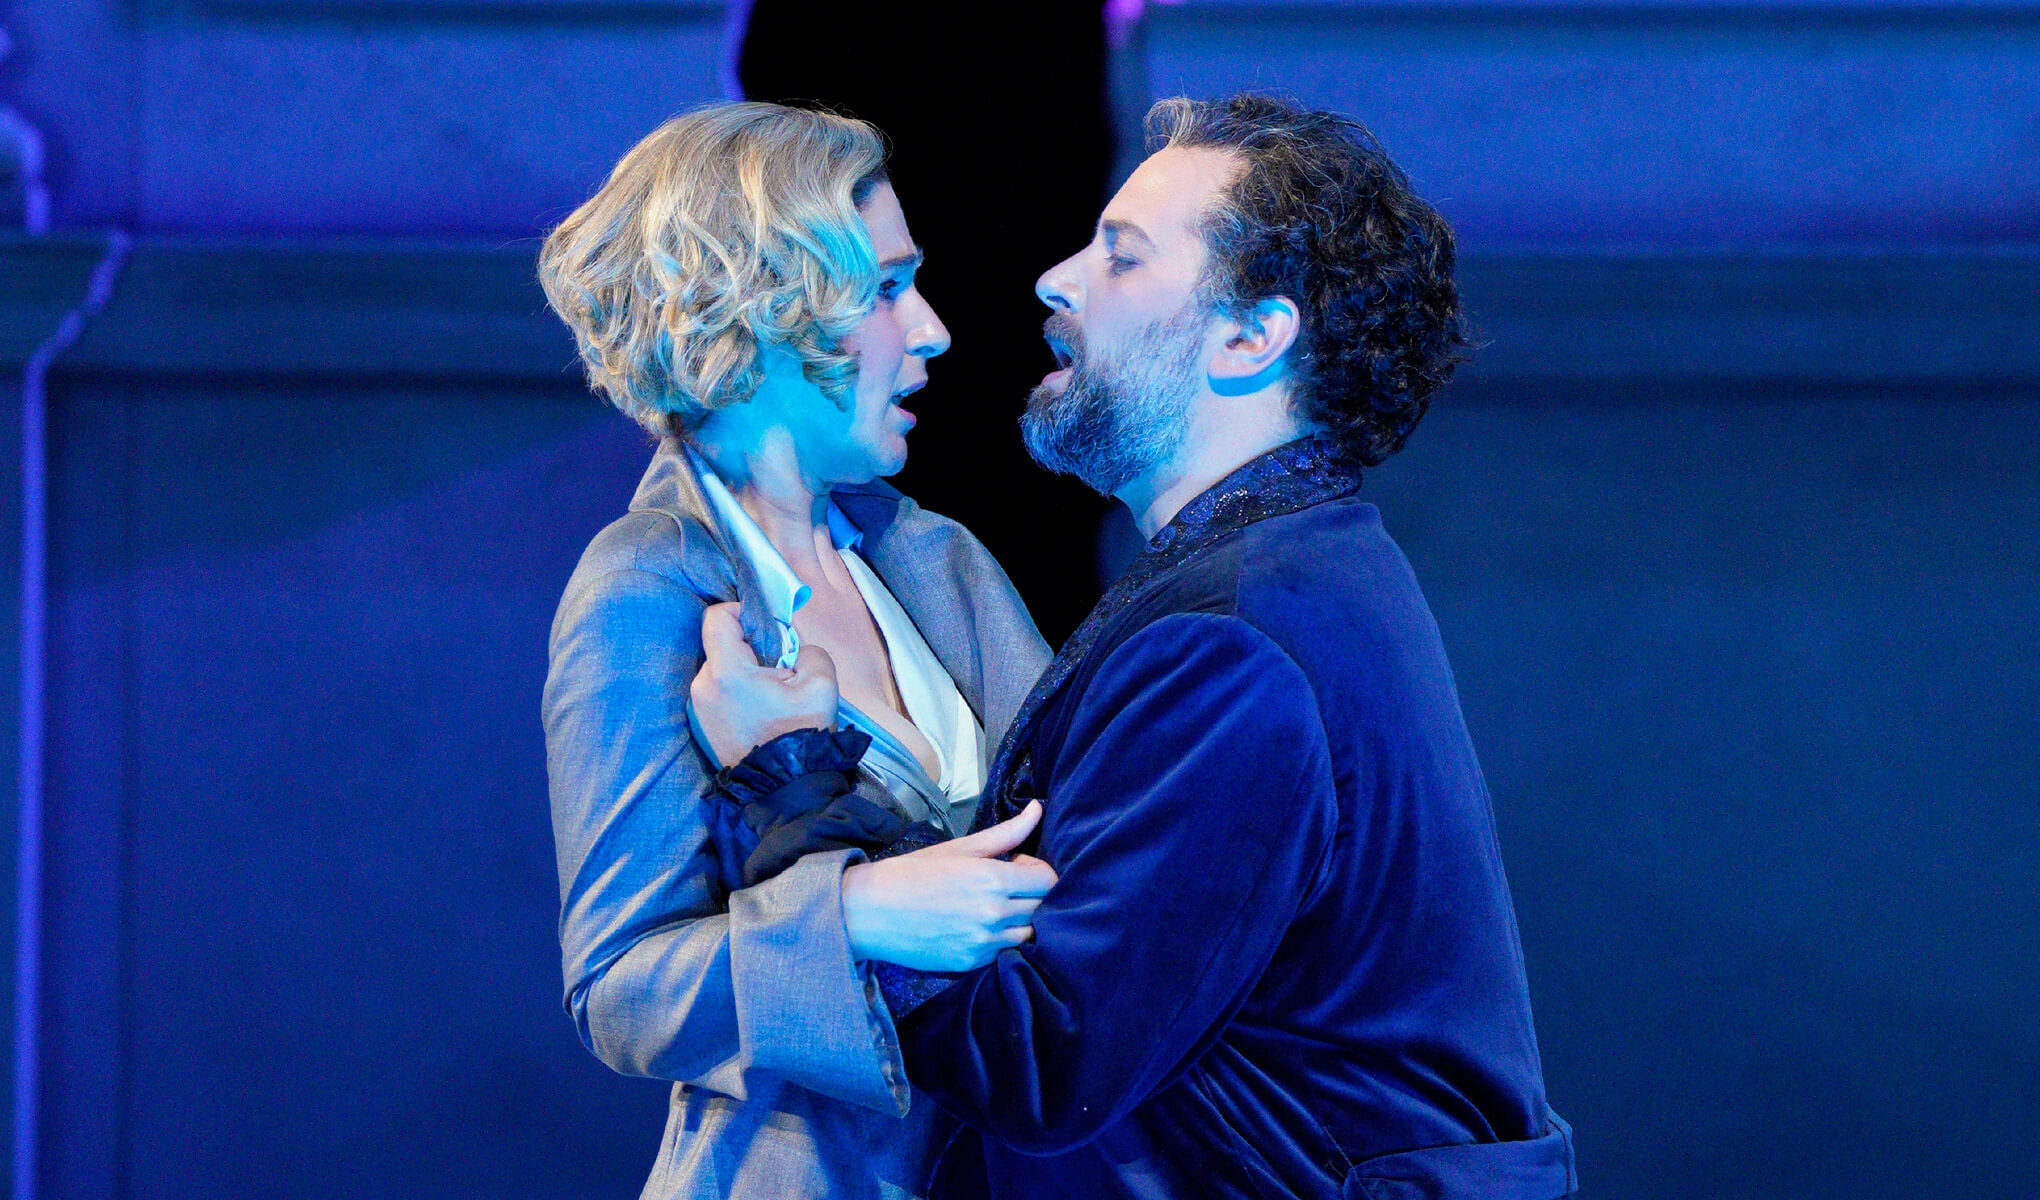 Don Giovanni aggressively grabbing a woman